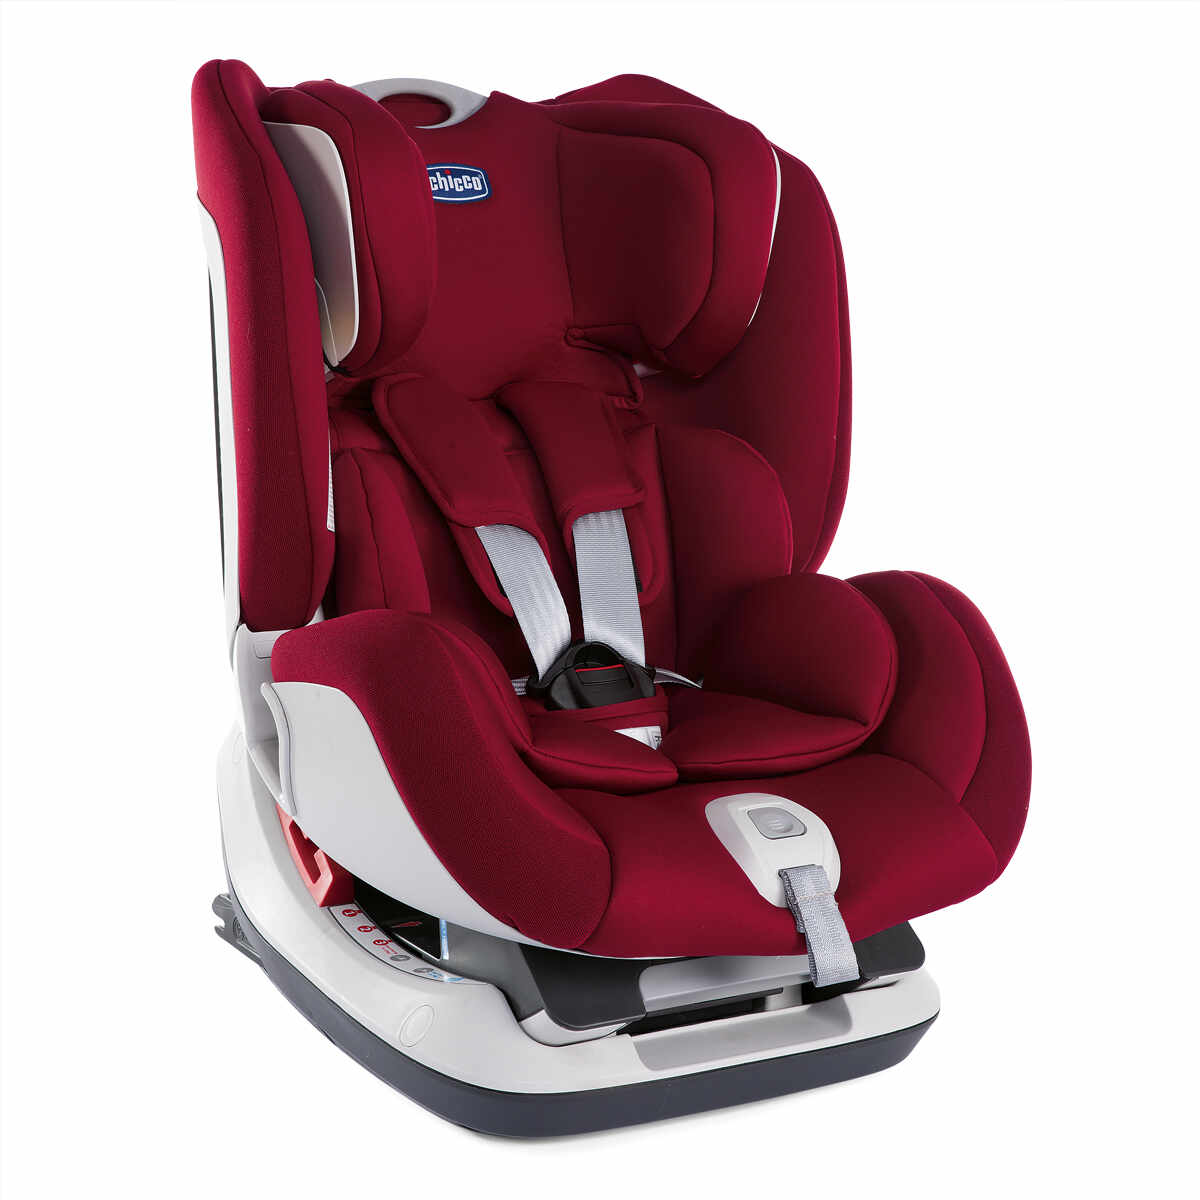 Scaun auto Chicco Seat Up 012 Isofix, Red Passion (Rosu), RESIGILAT